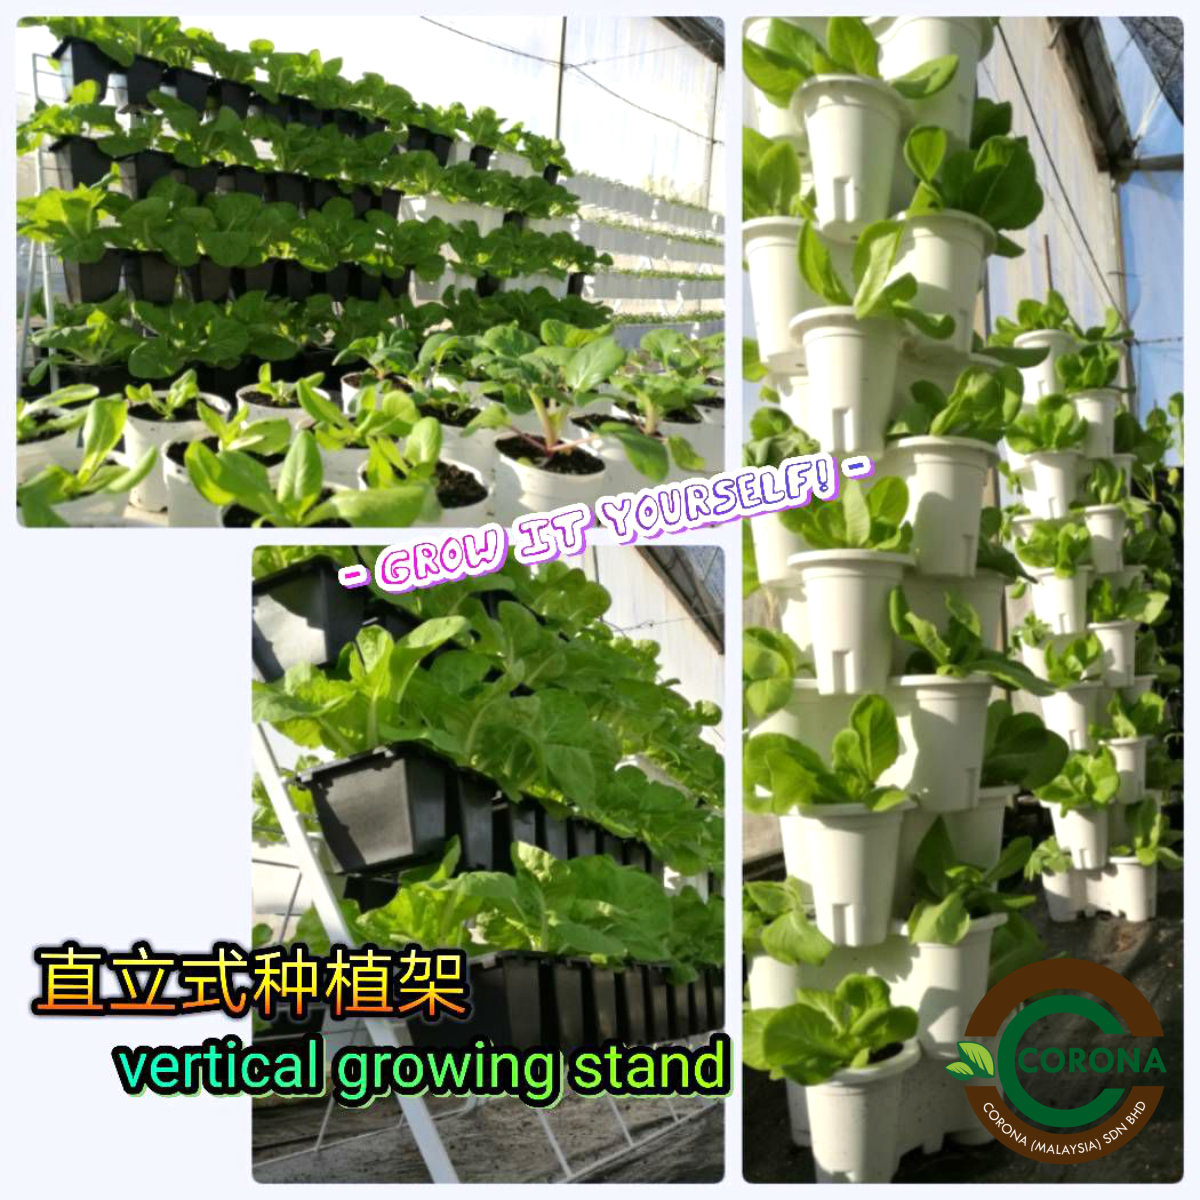 Corona Malaysia Sdn Bhd Grow Your Own Food at Home DIY plantation Organic Vegetables Batu Pahat Johor Malaysia Vertical Growing Stand Alvin Tay Adrian Teh A07